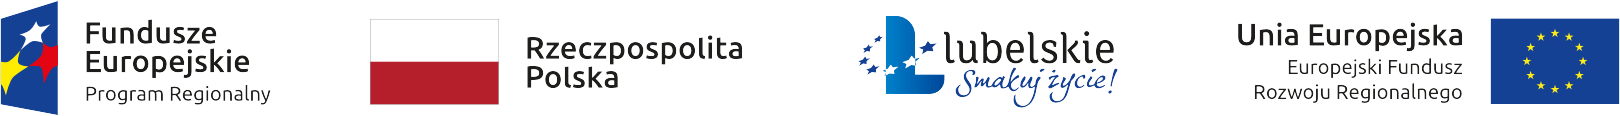 logo projektu ue